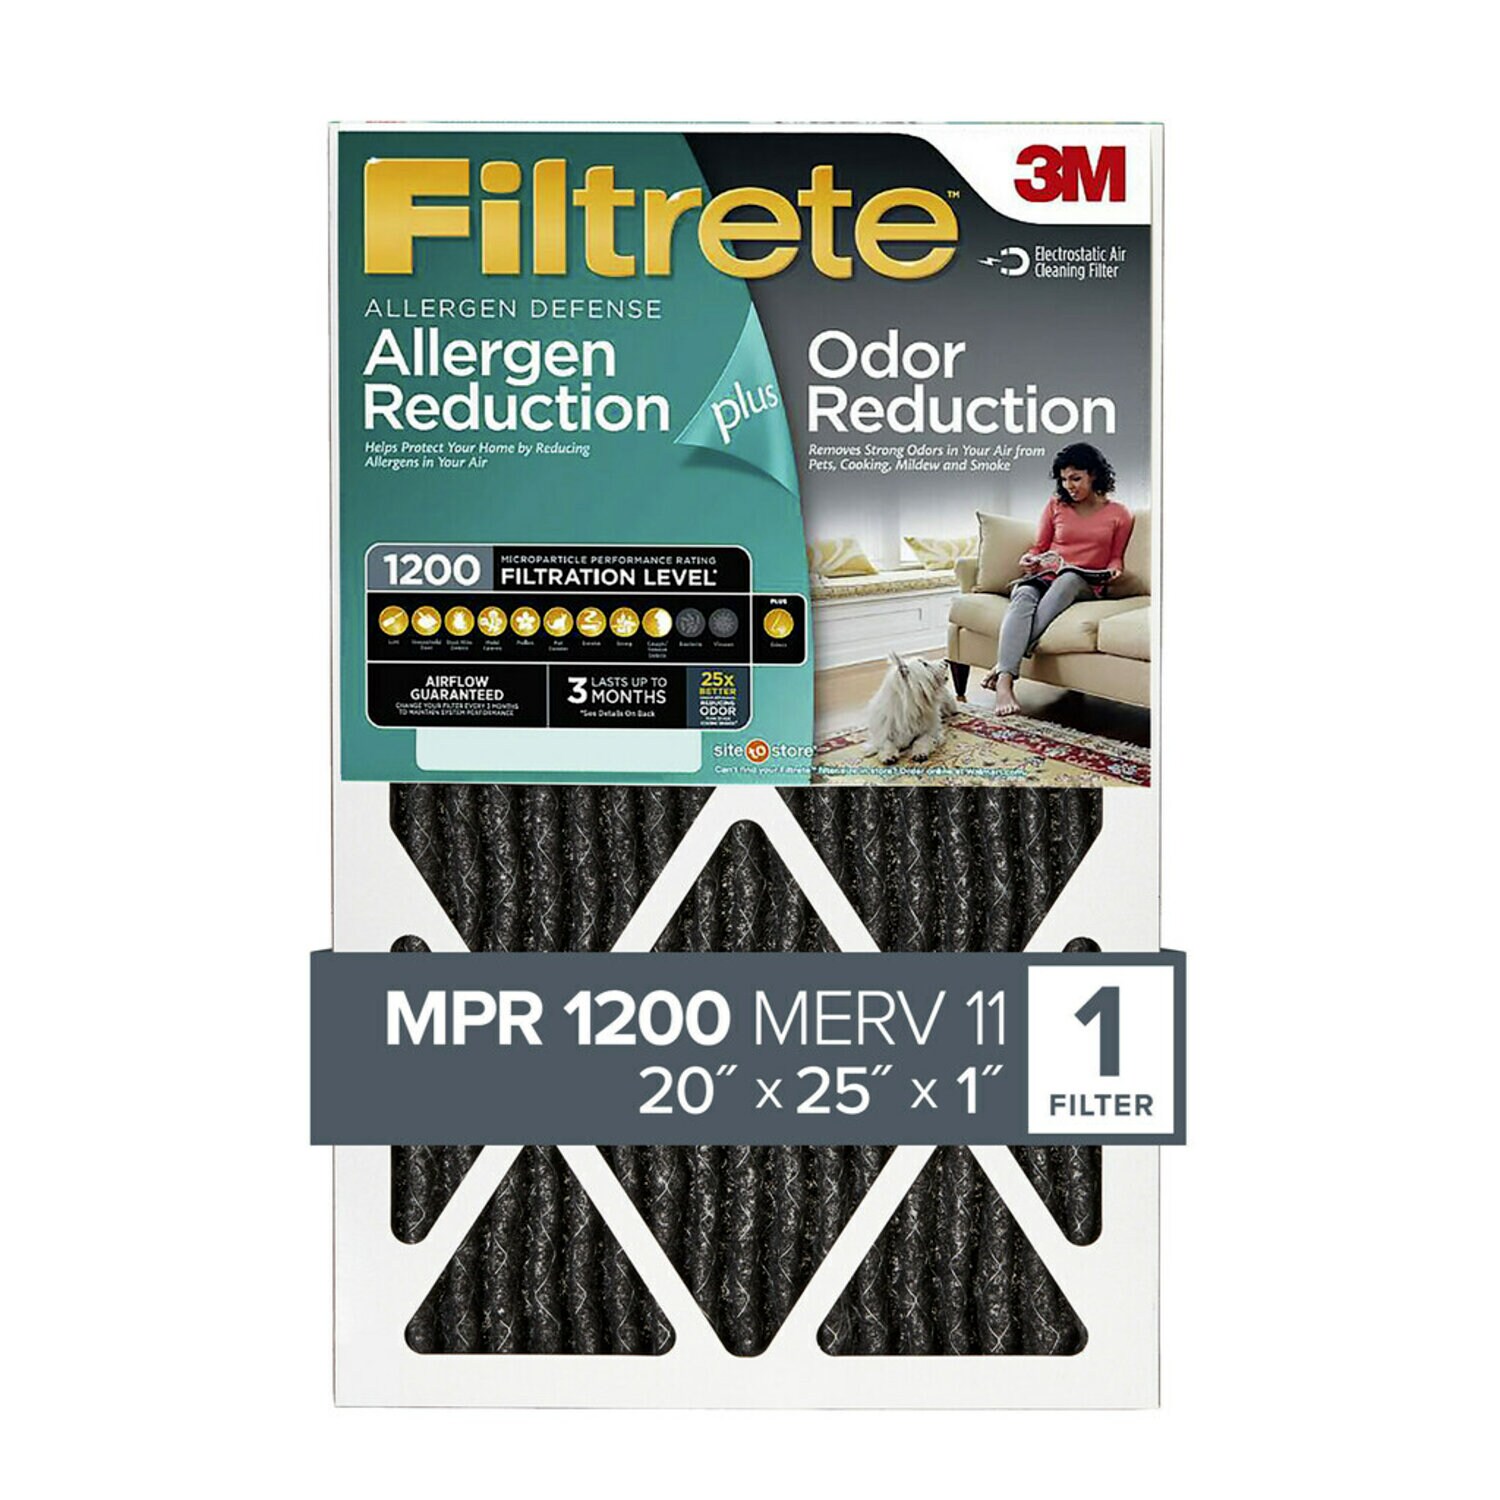 7010251154 - Filtrete Home Odor Reduction Filter HOME03-4, 20 in x 25 in x 1 in
(50,8 cm x 63,5 cm x 2,5 cm)